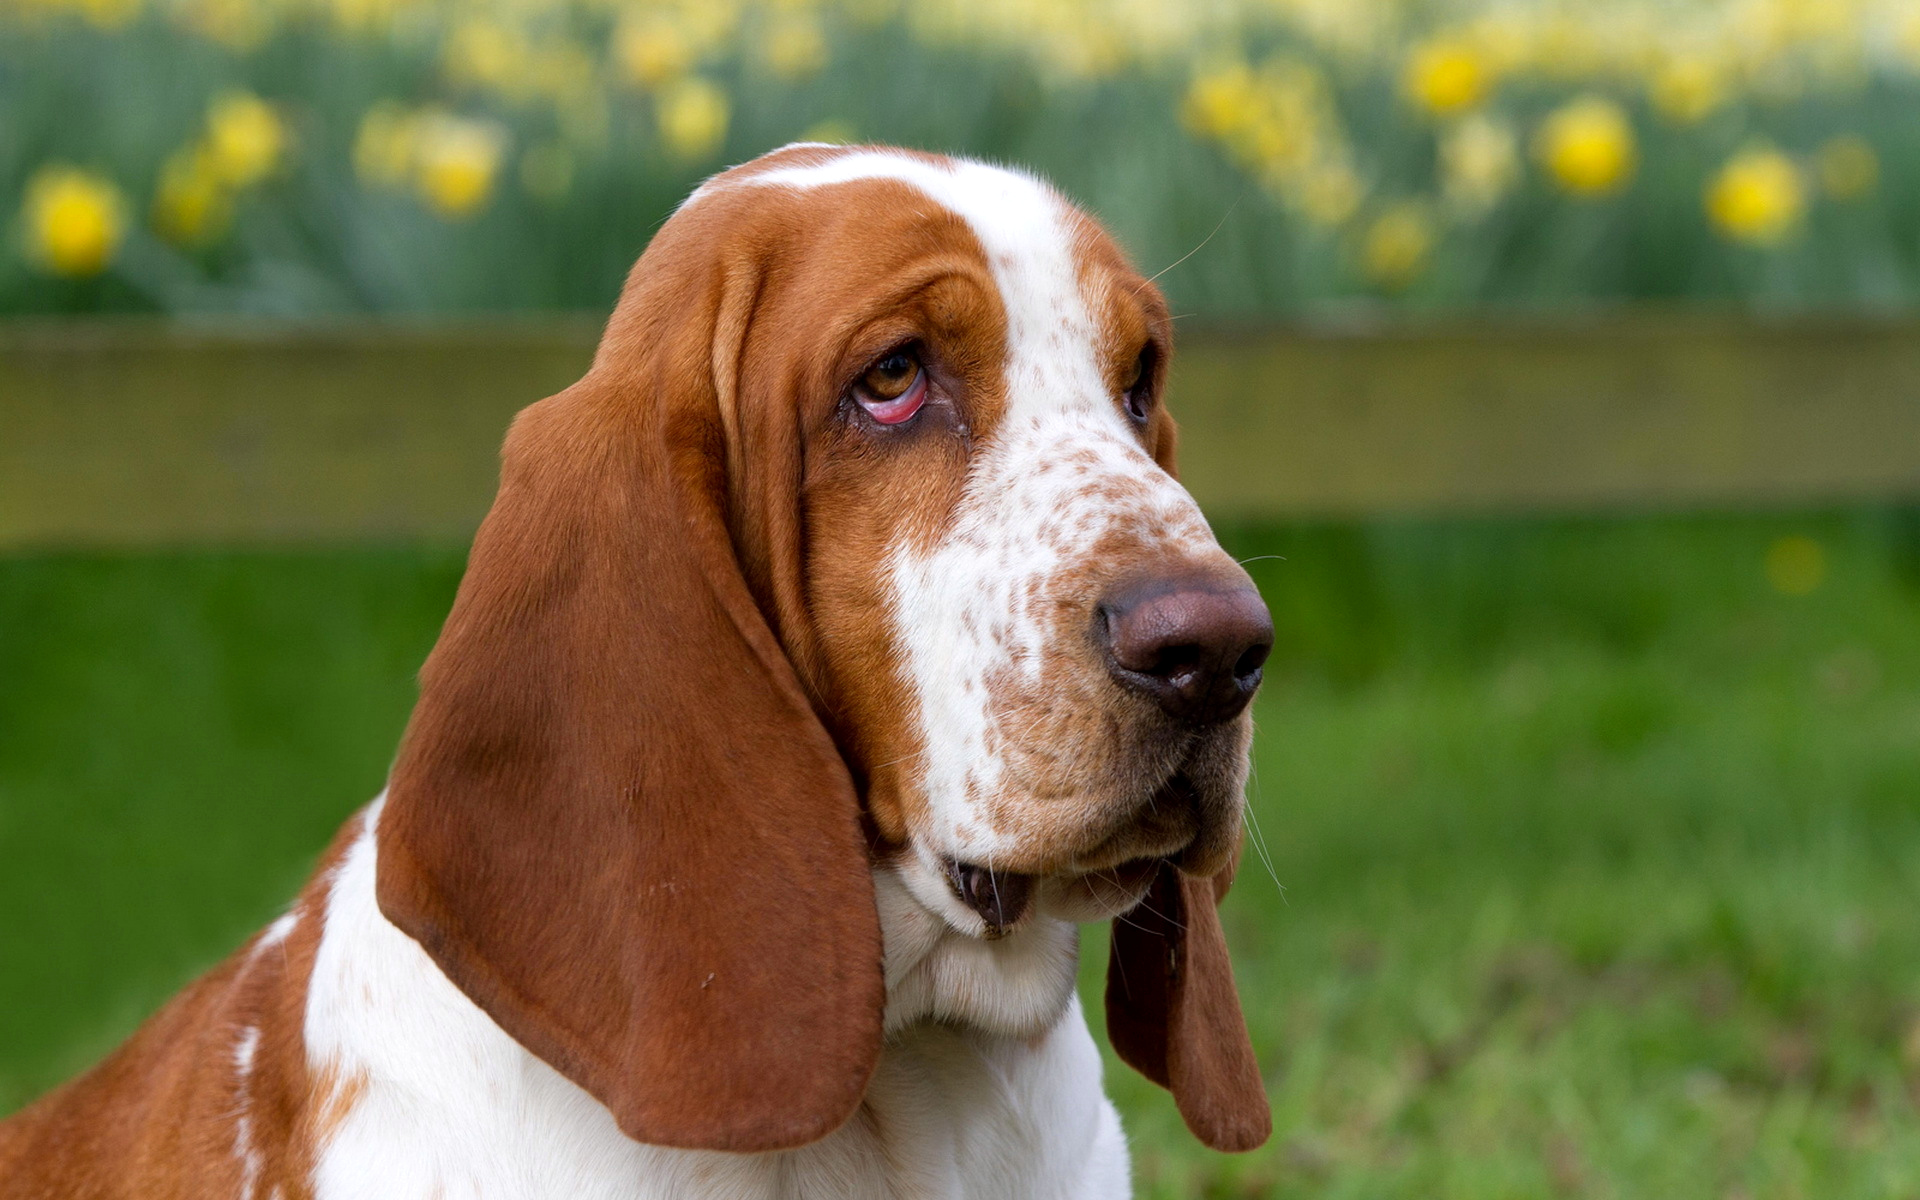 Длинные уши на английском. Бассет хаунд. Порода собак Бассет хаунд. Бесенхаунт порода собак. Ушастый Бассет-хаунд.